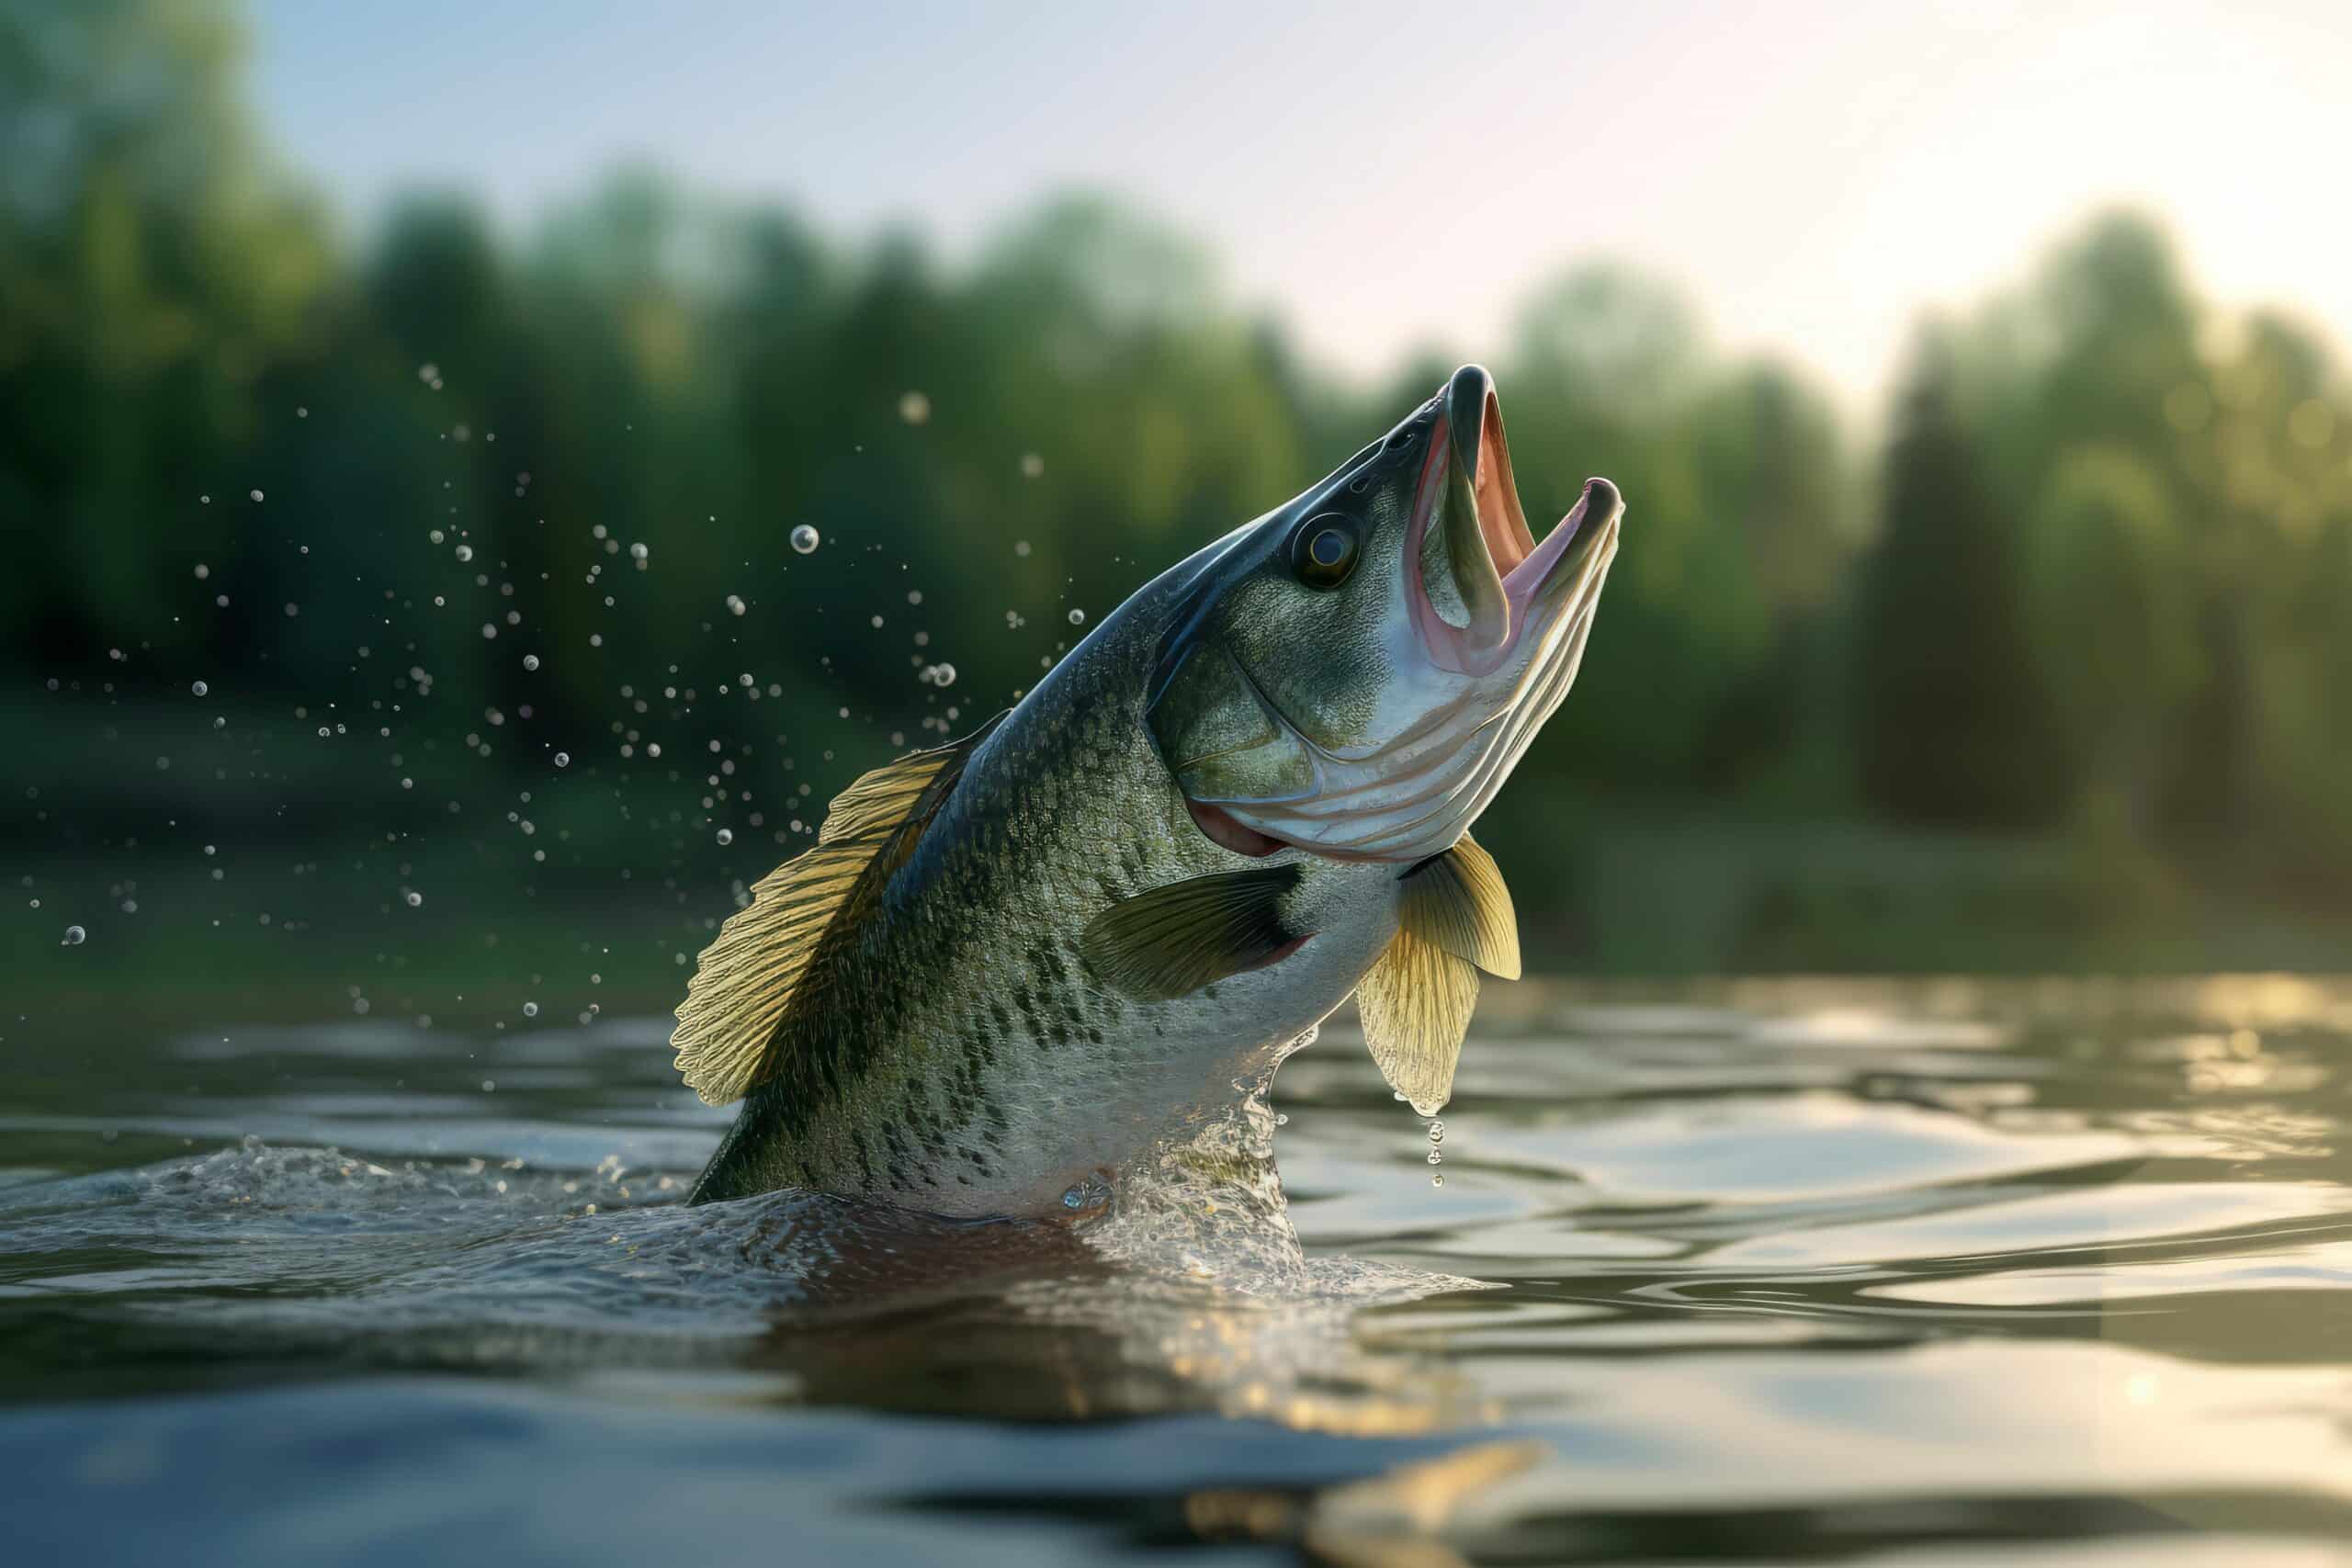 fanatic4fishing.com : Are bass good to eat?